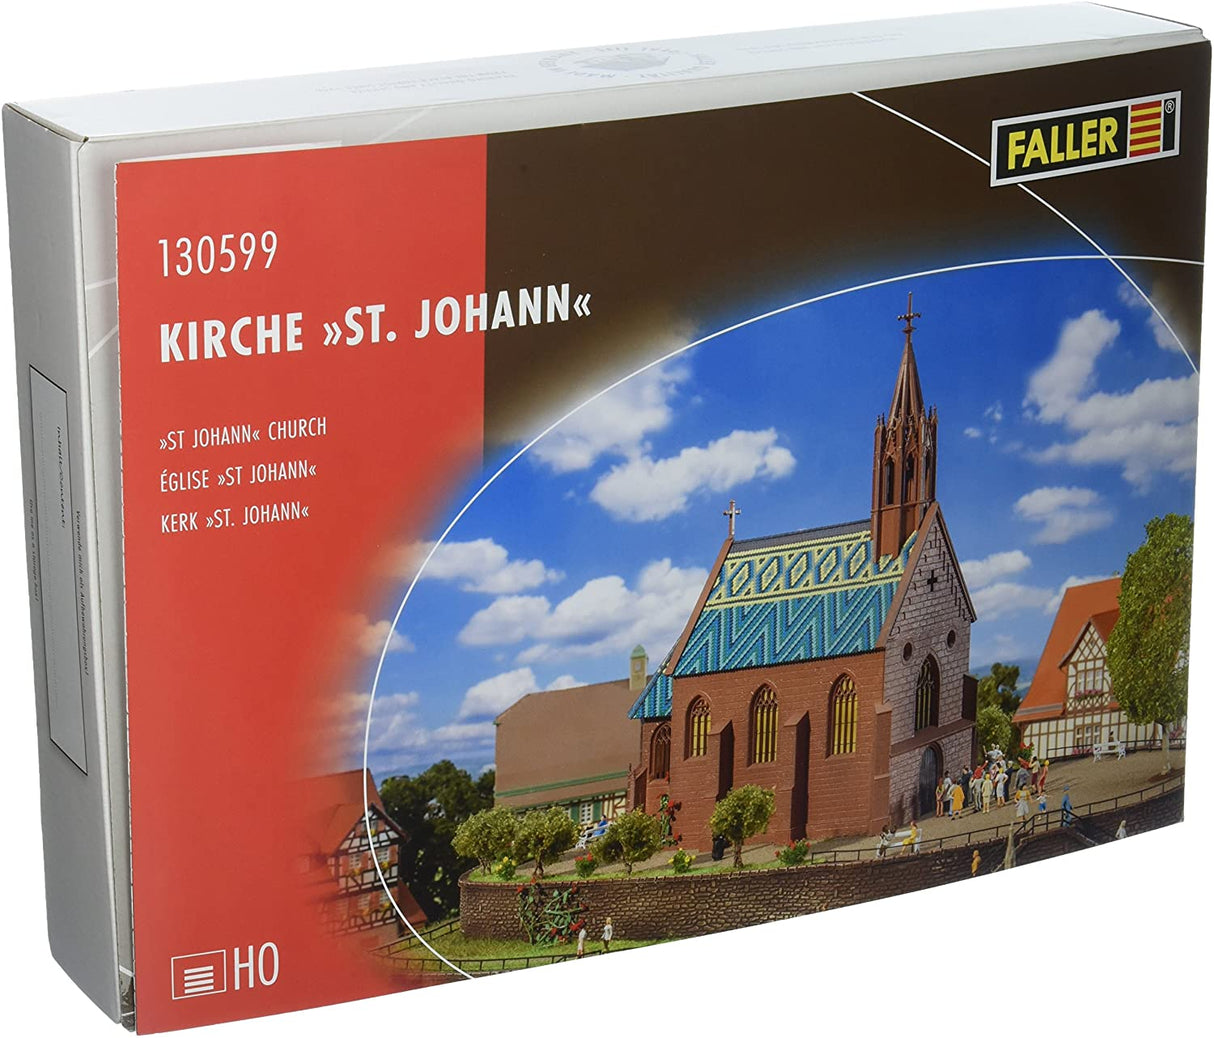 Faller Gmbh HO St. Johann Church - Kit - 8-3/8 4-5/16 x 10-1/4in 21.2 x 10.9 x 26cm Faller Gmbh TRAINS - HO/OO SCALE